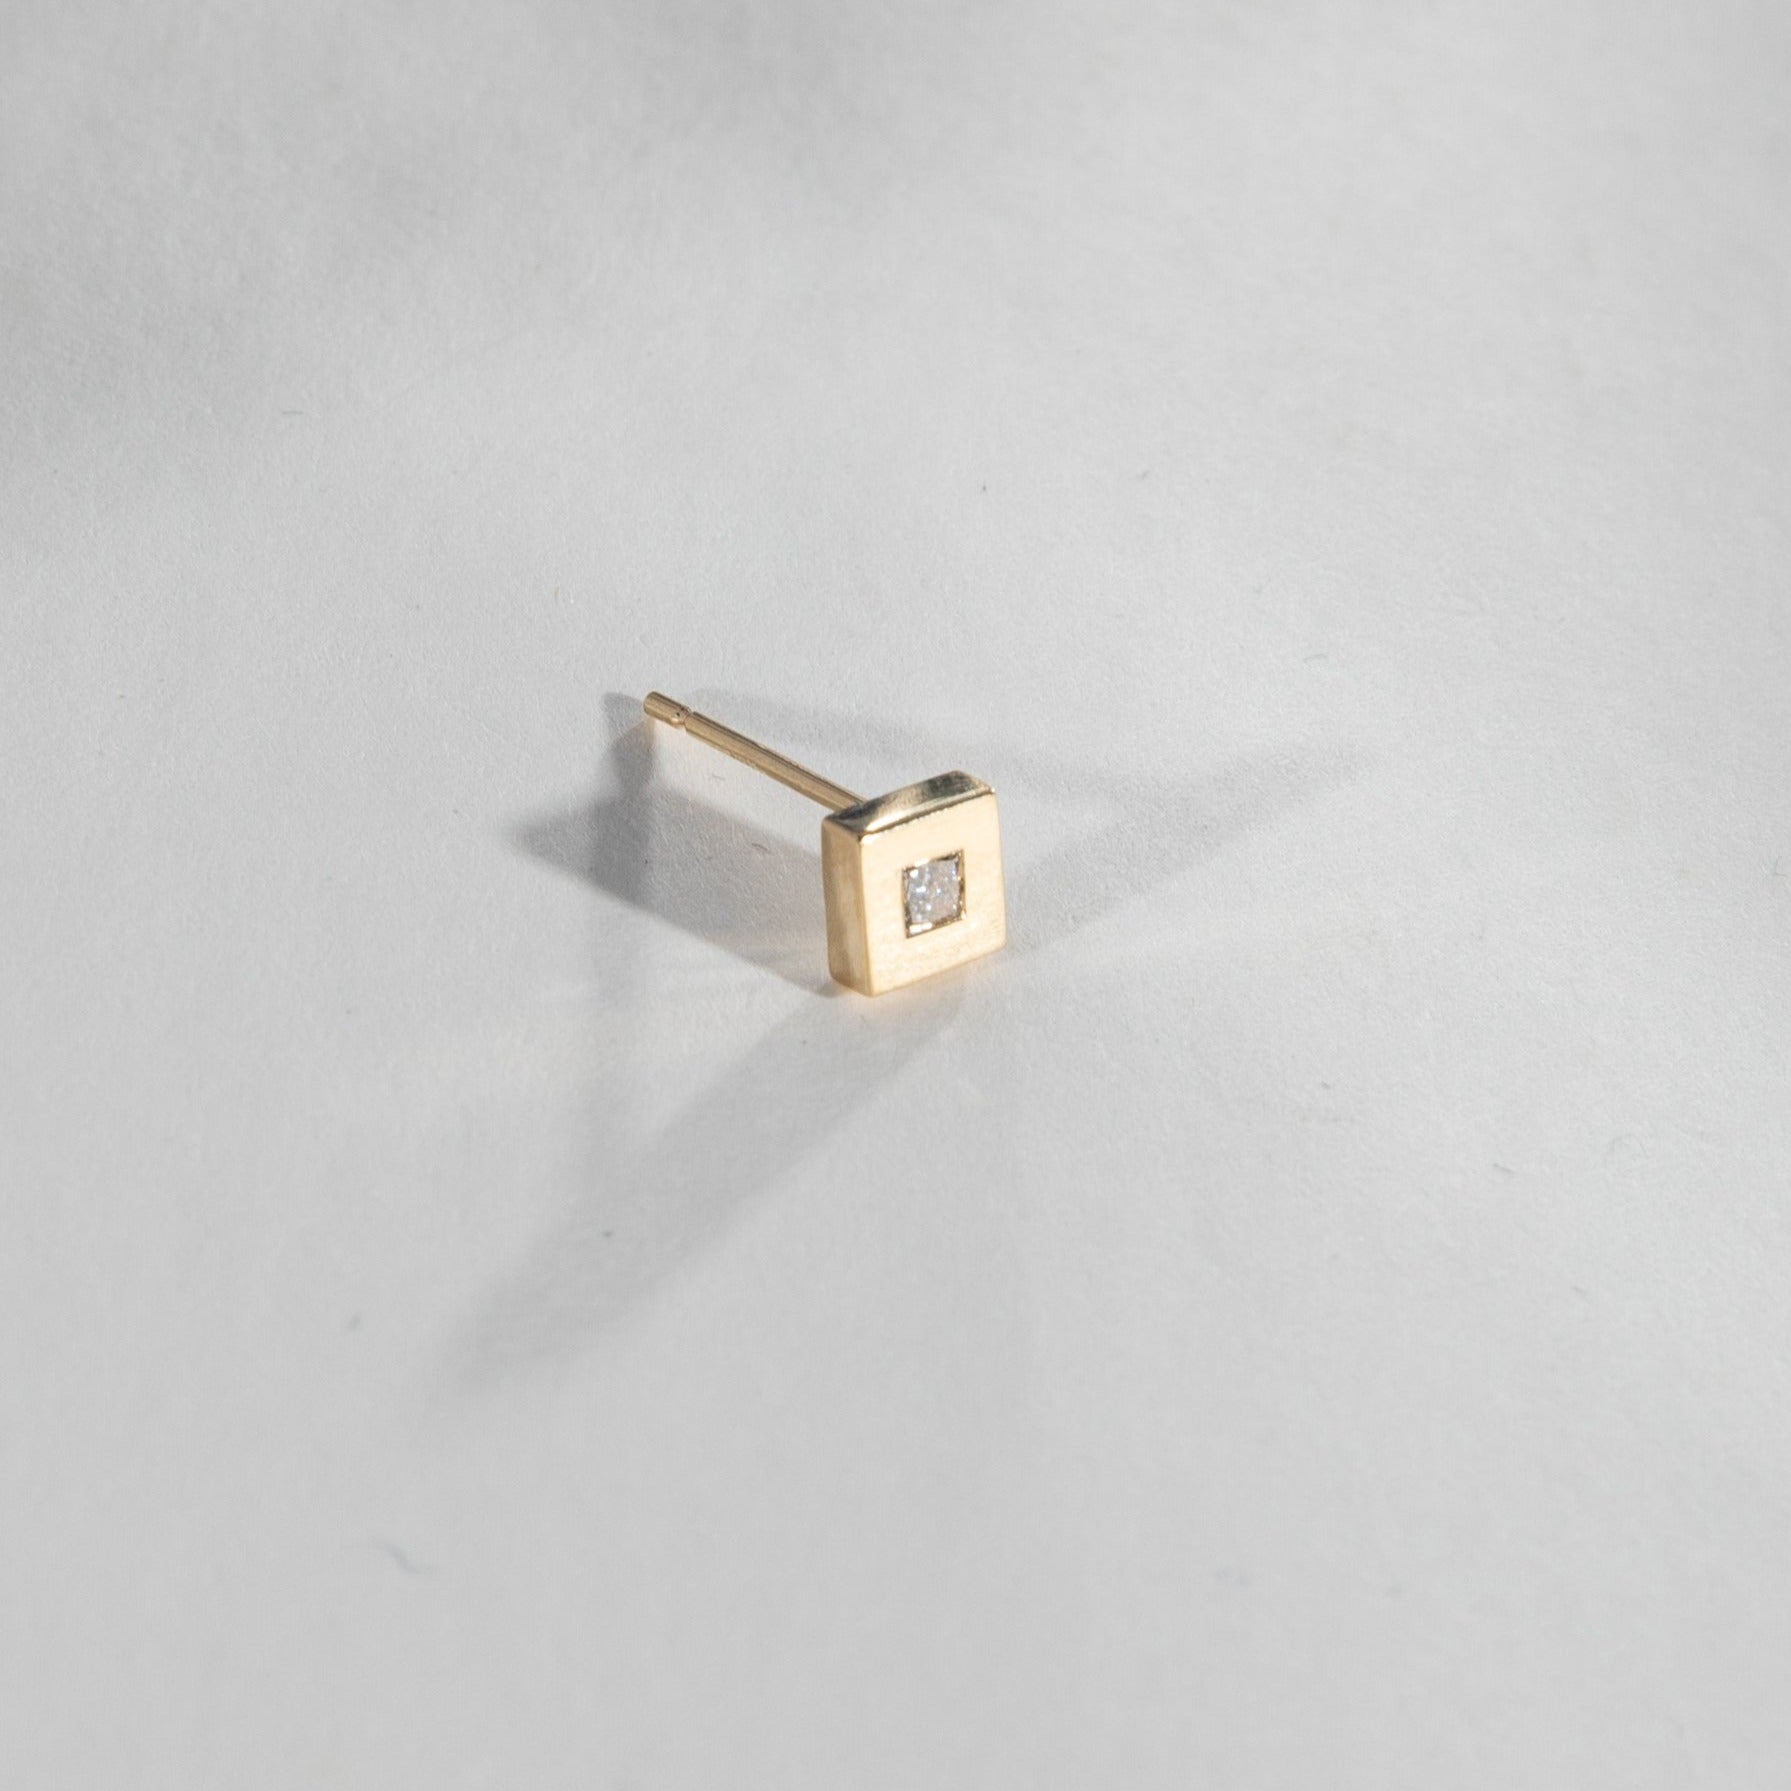 Sada Unisex Earrings in 14k Gold set with lab-grown diamonds By SHW Fine Jewelry New York City